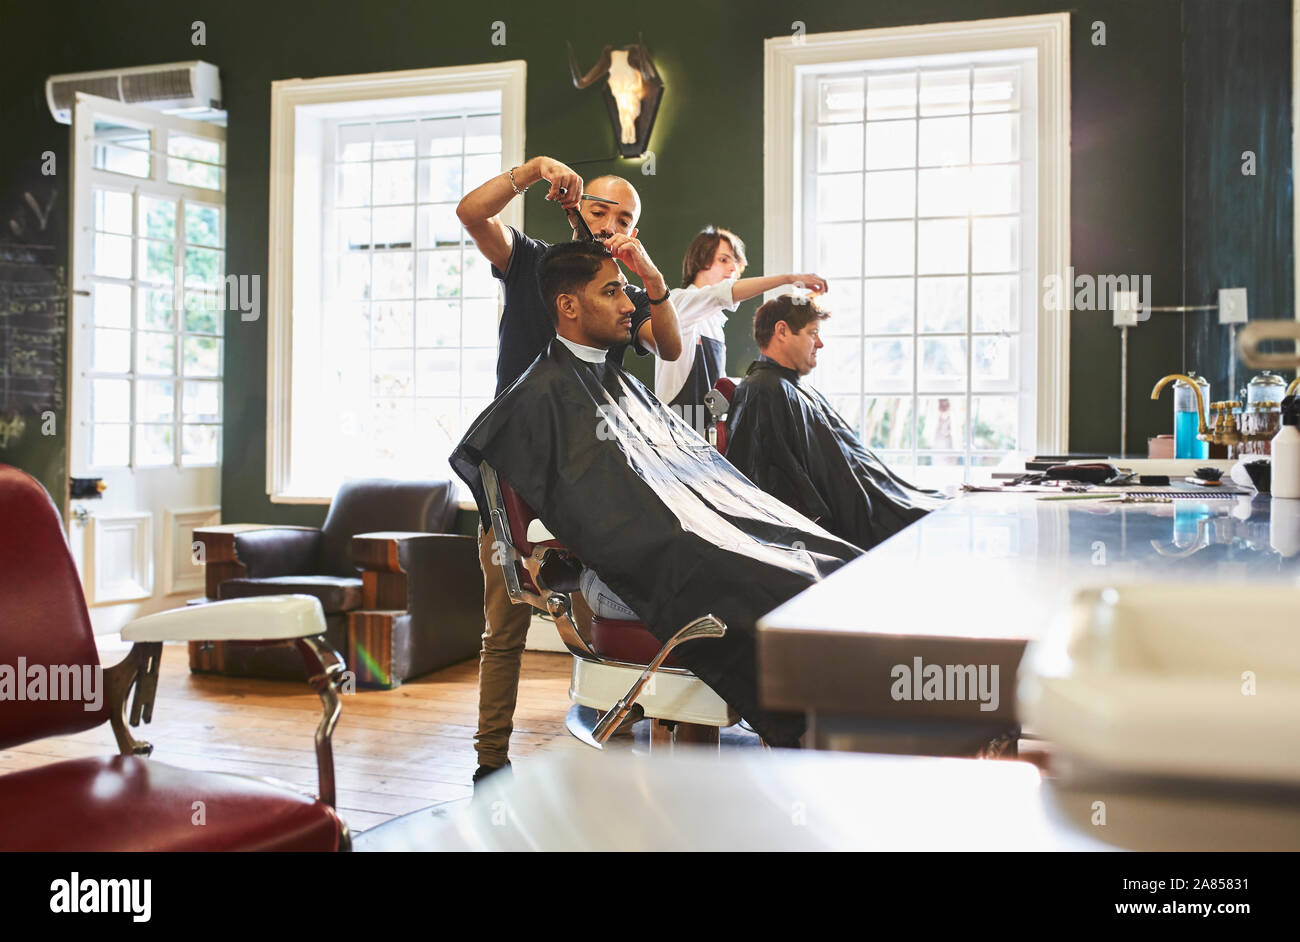 Male barber cutting hair of customer in barbershop Stock Photo